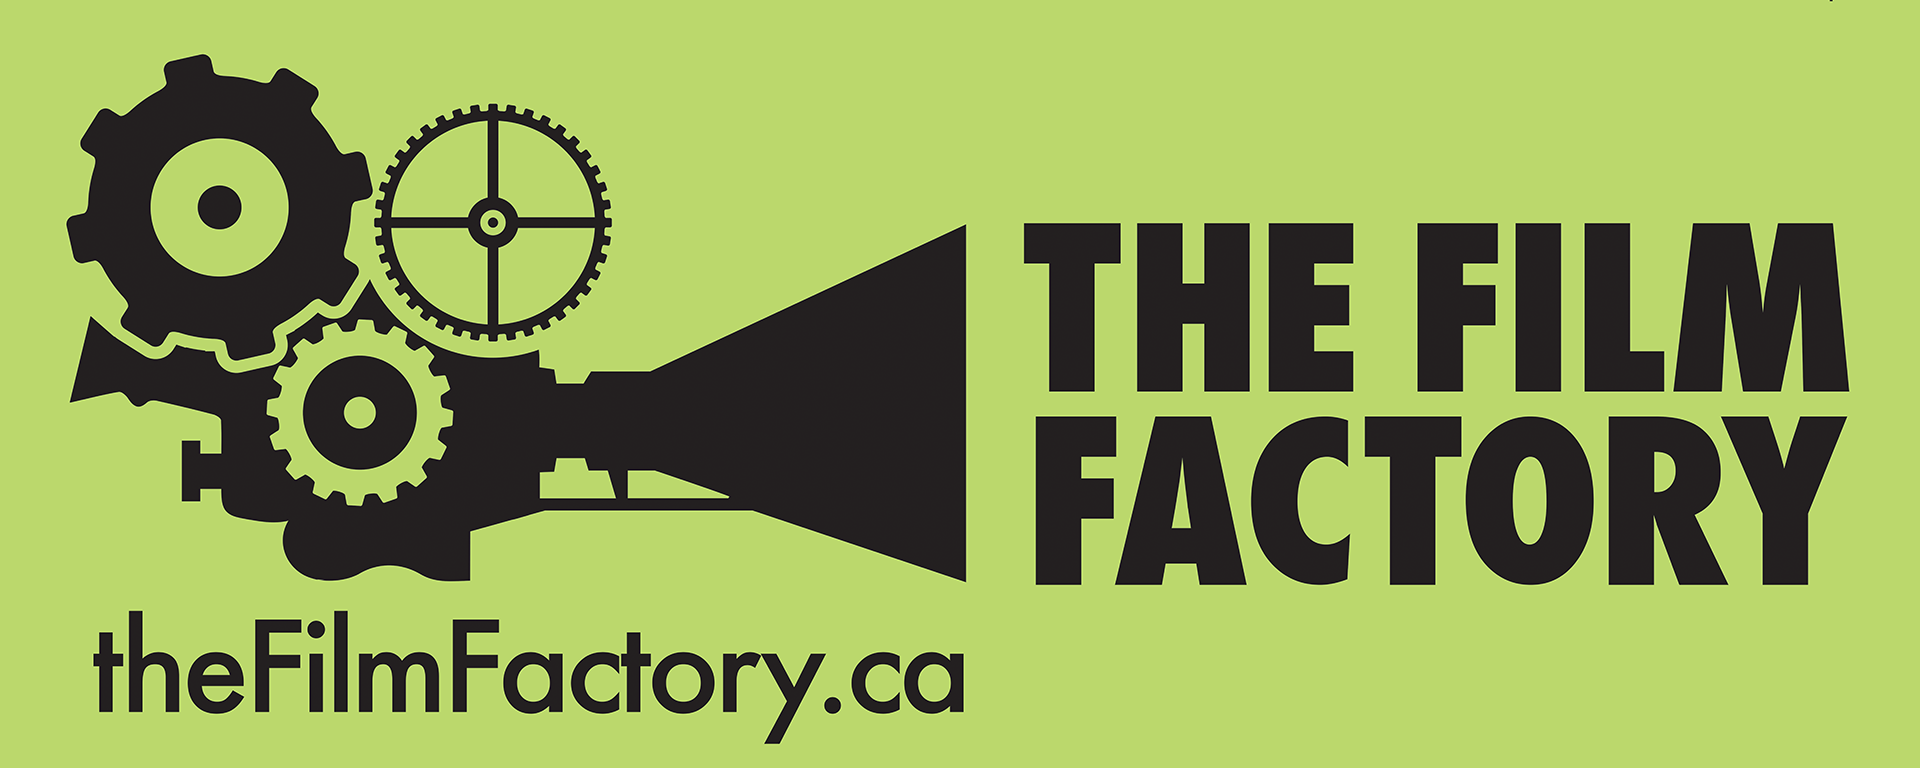 The Film Factory Inc